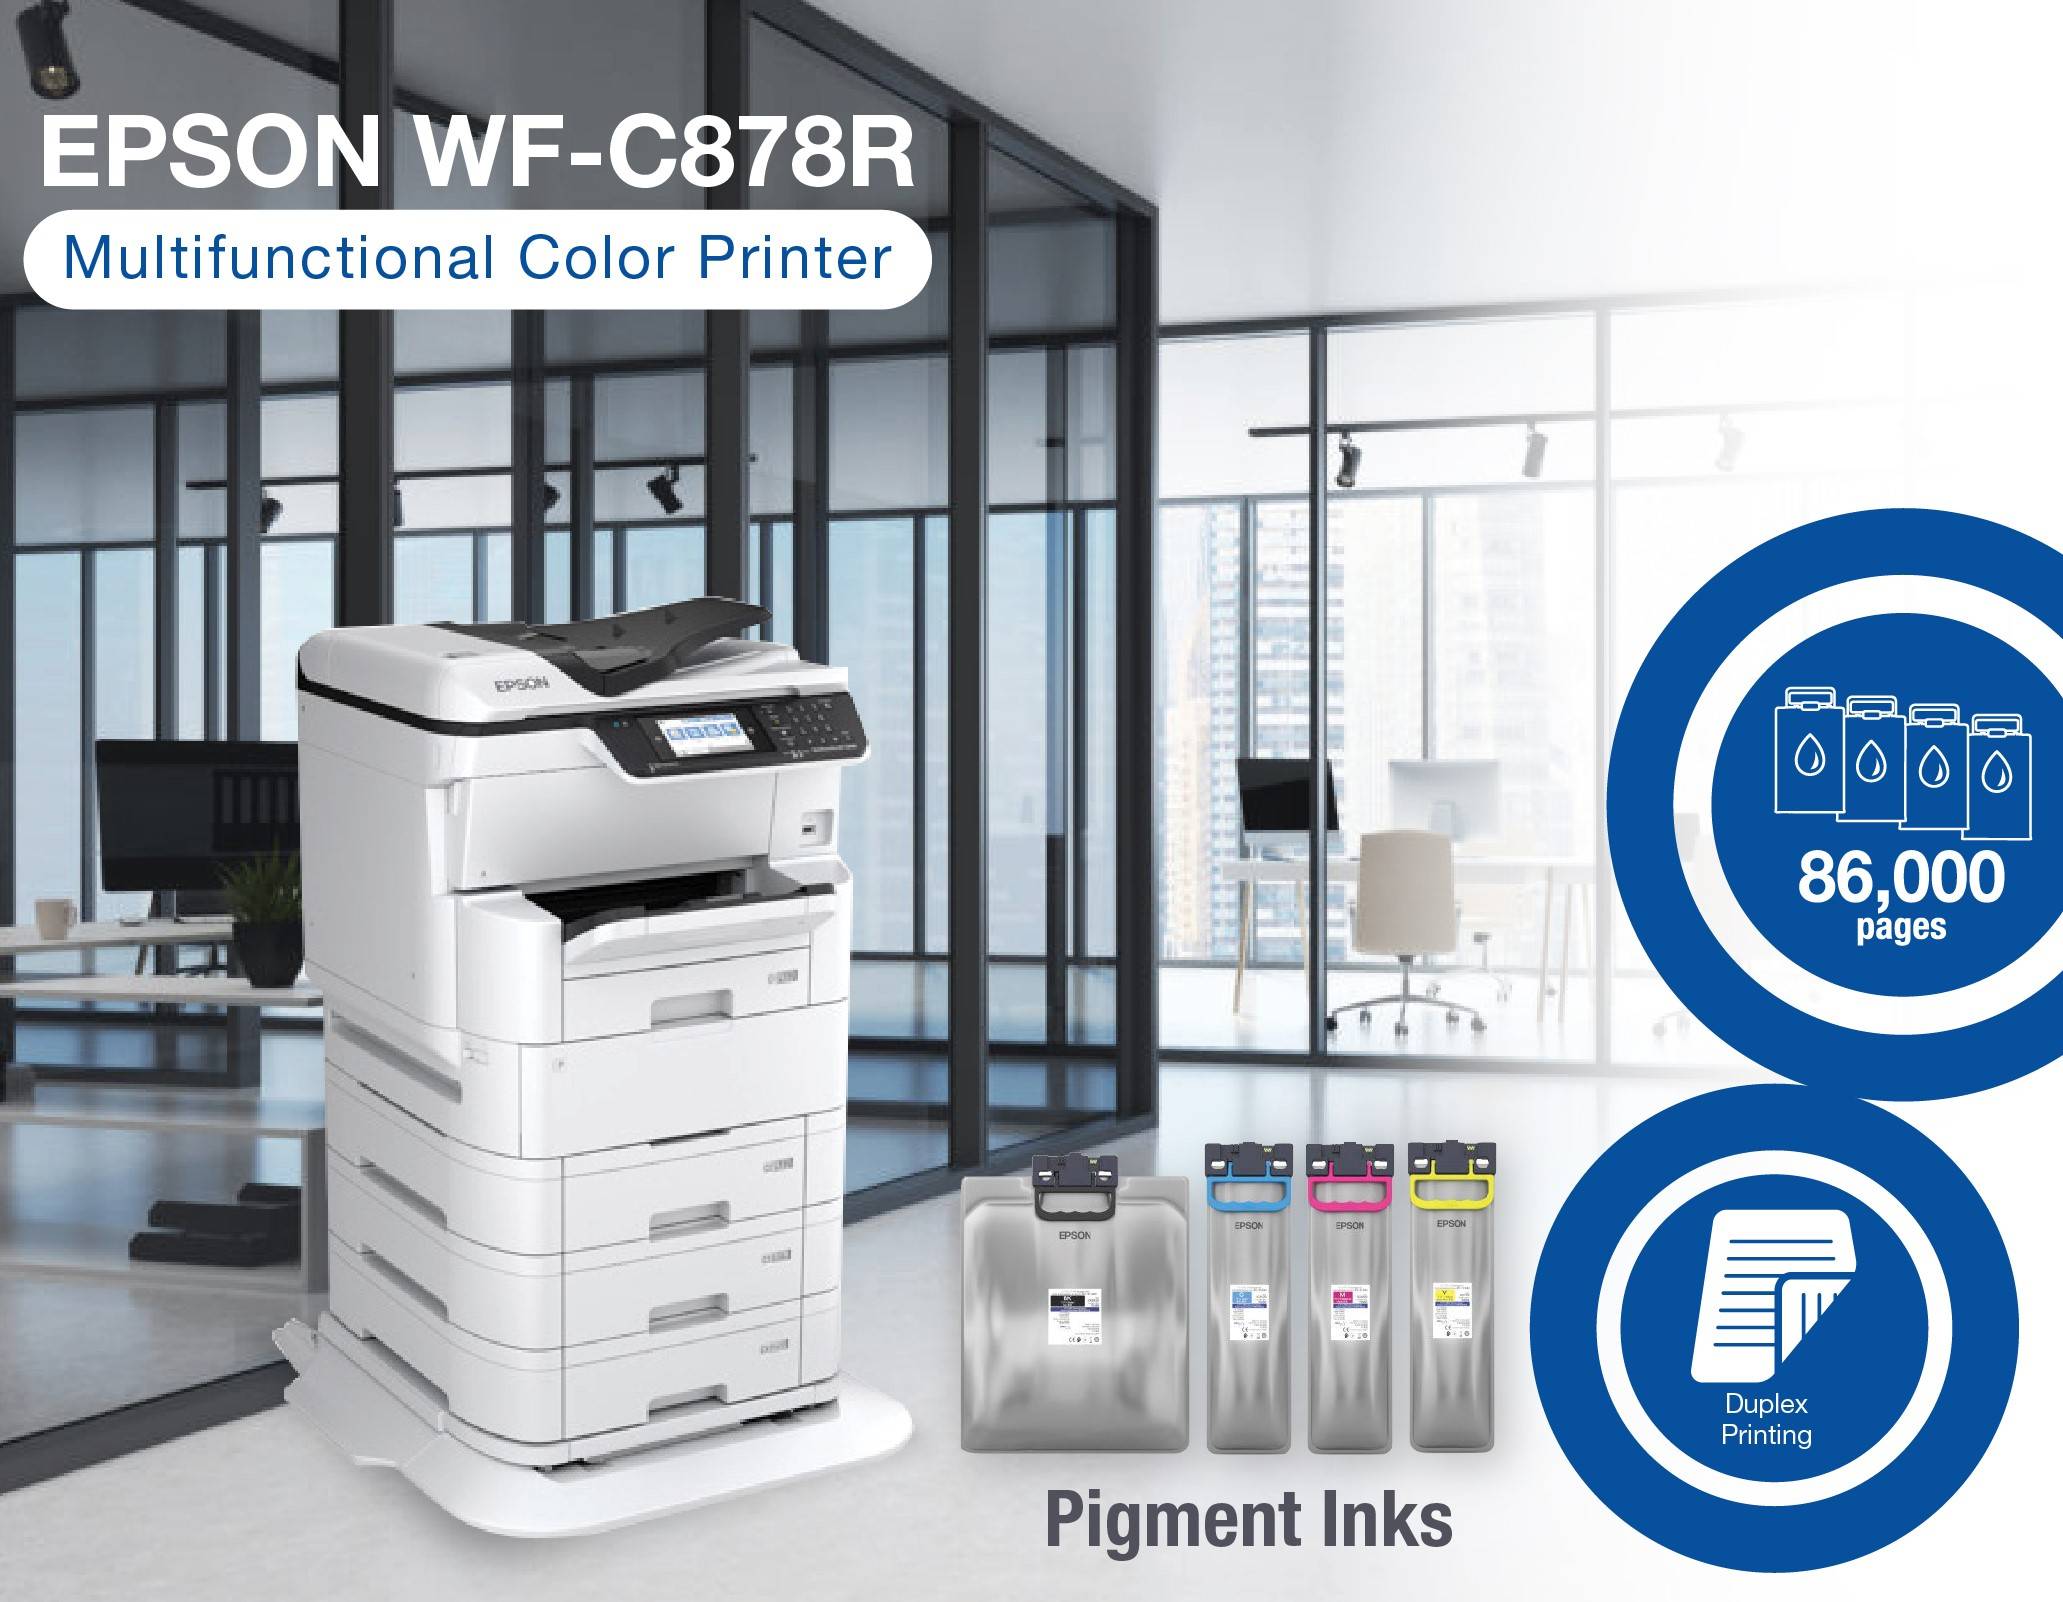 Epson Workforce Pro Wf C878r Multifunction Color Printer Aws Cambodia Ltd 0737